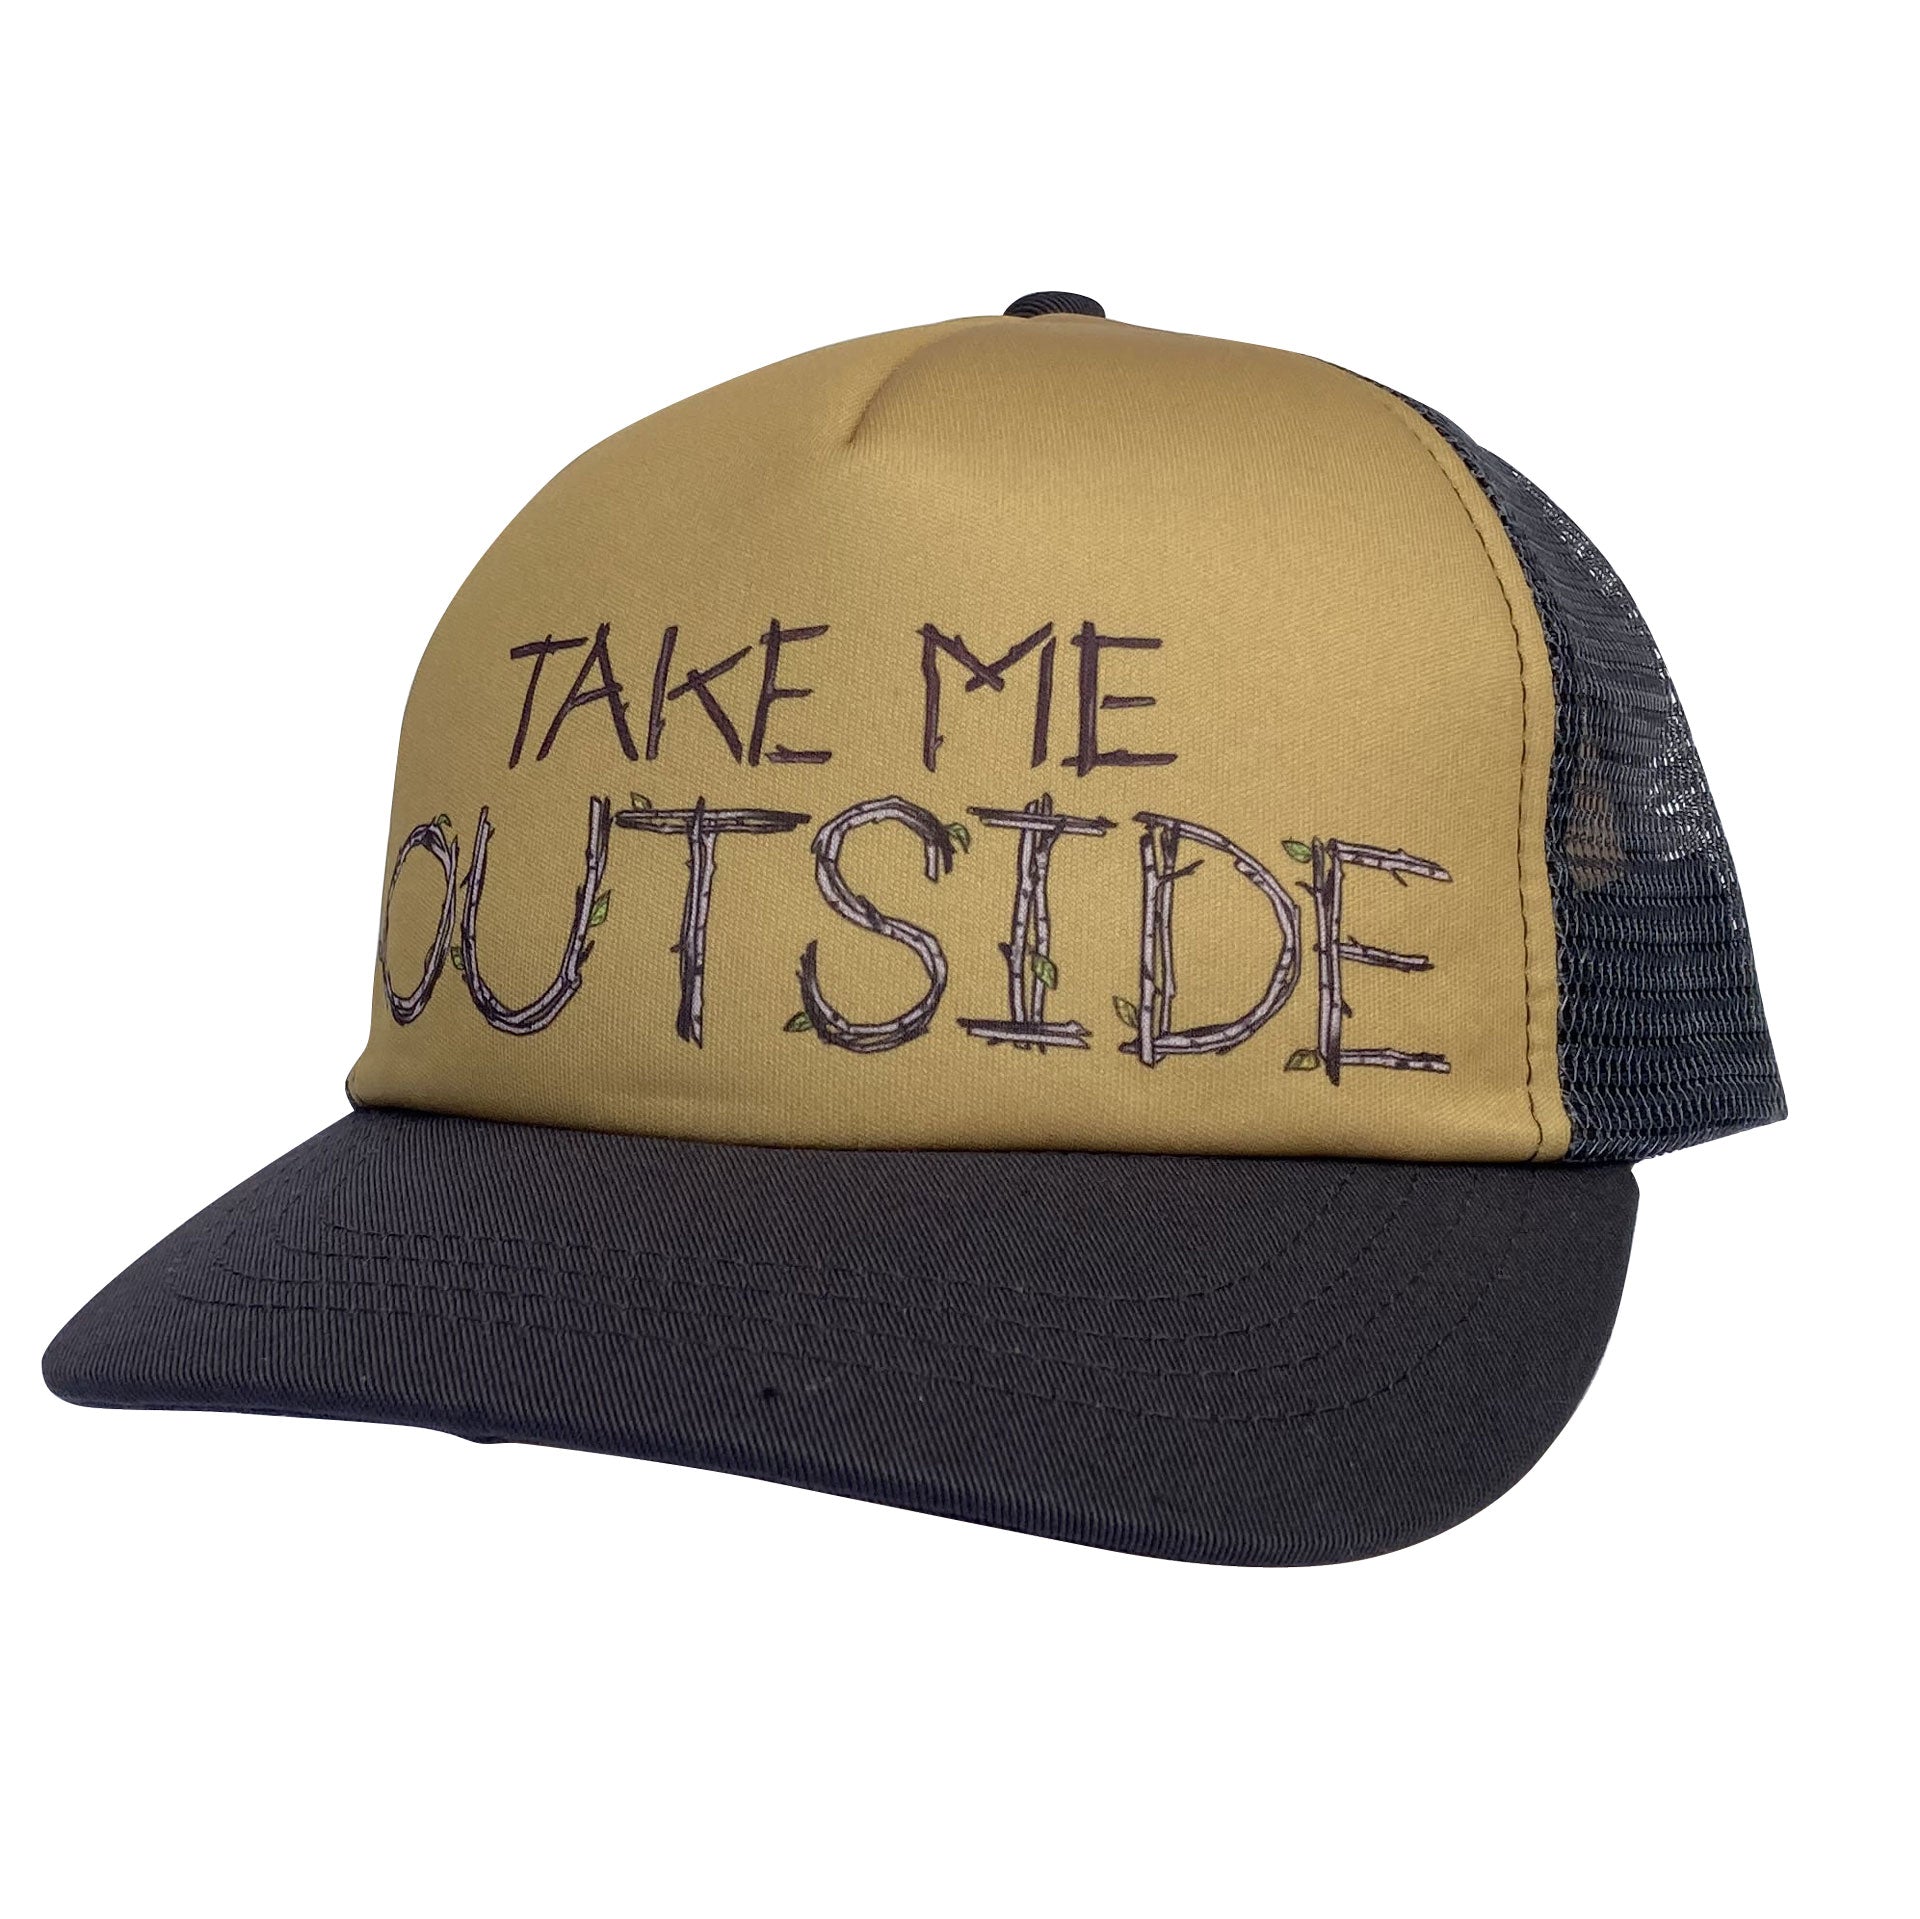 Take Me Outside Kids Hat - Honey